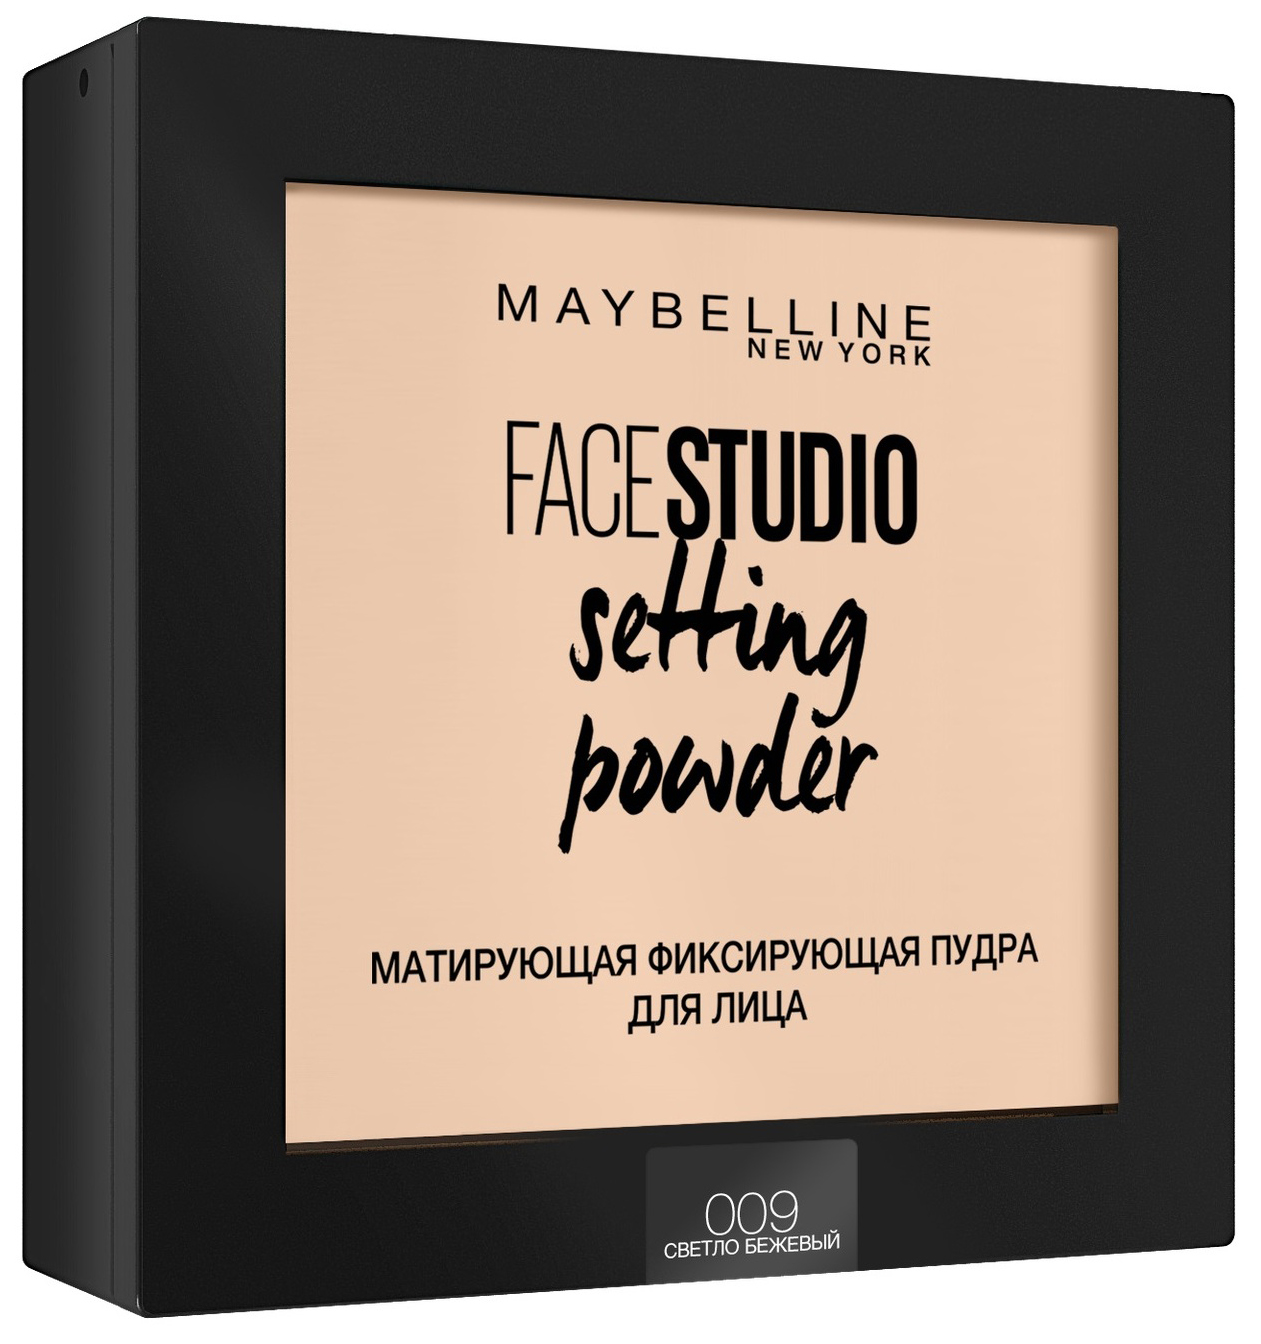 Пудра Maybelline Face Studio Setting Powder 009 Светло-бежевый 9 г пудра maybelline face studio setting powder 006 розово бежевый 9 г